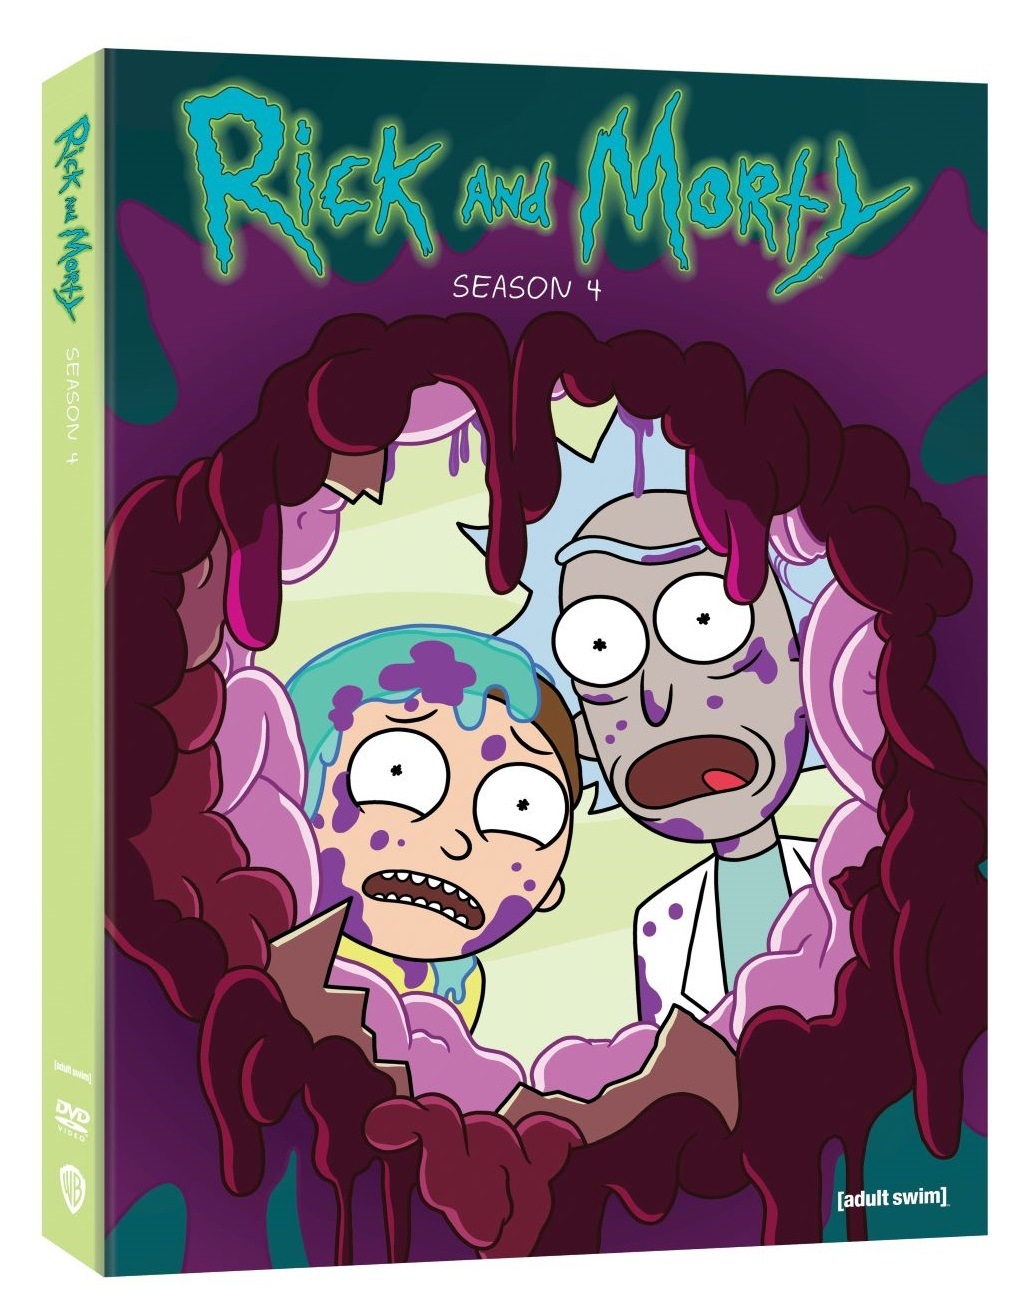 Rick and Morty Season 4 Blu-ray DVD release